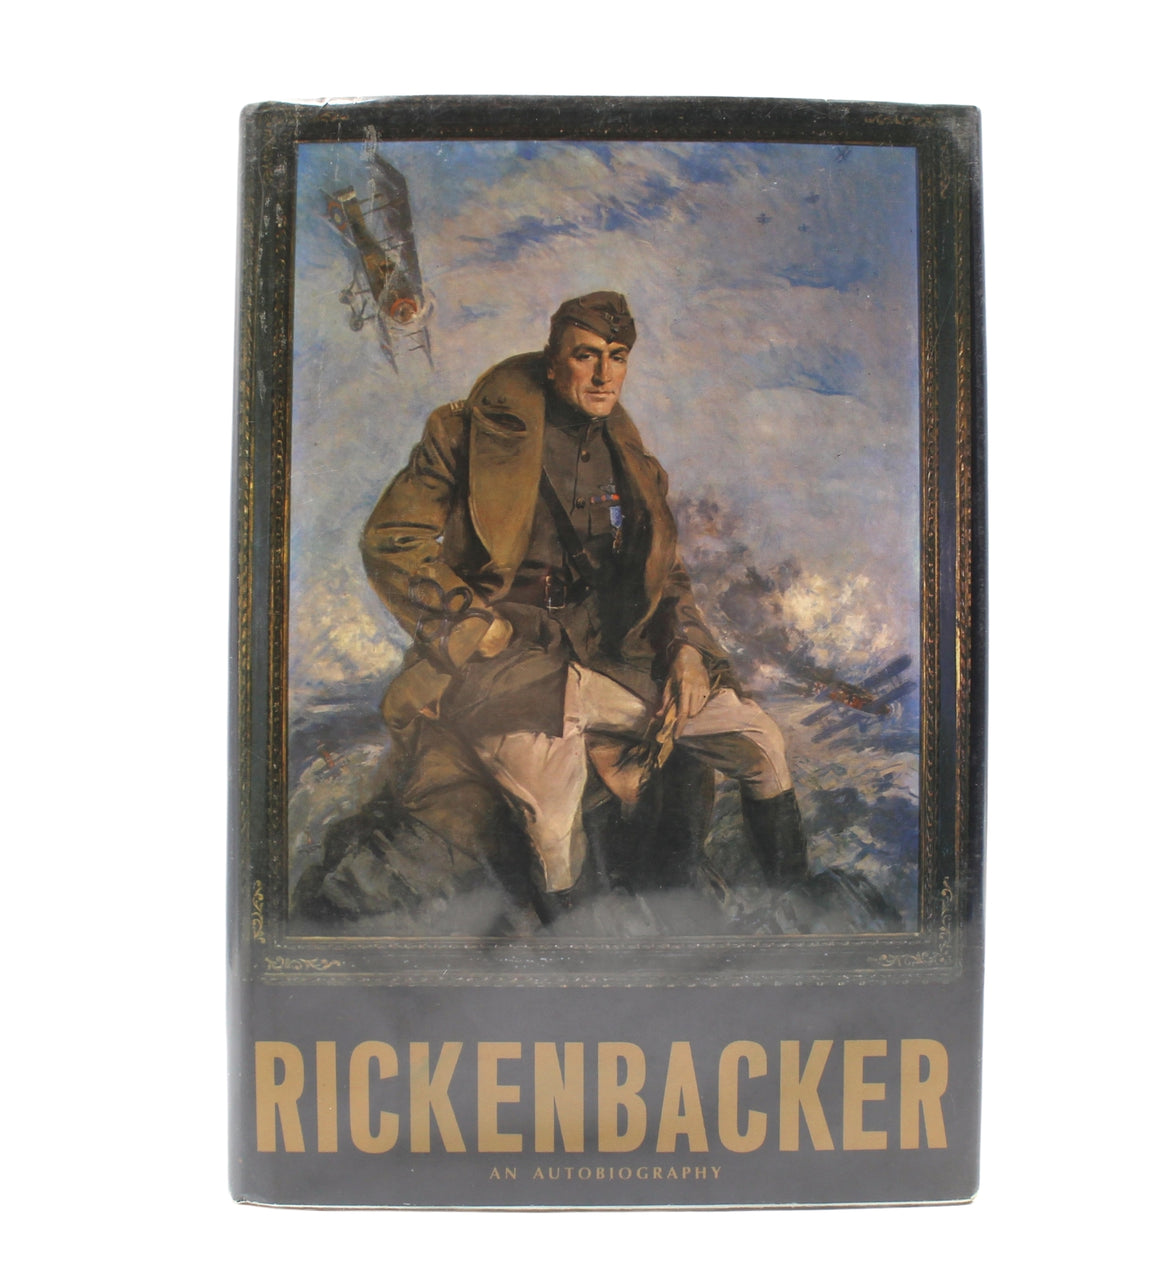 Rickenbacker: An Autobiography, Signed by Eddie Rickenbacker, First Edition, Third Printing, in Original Dust Jacket, 1967